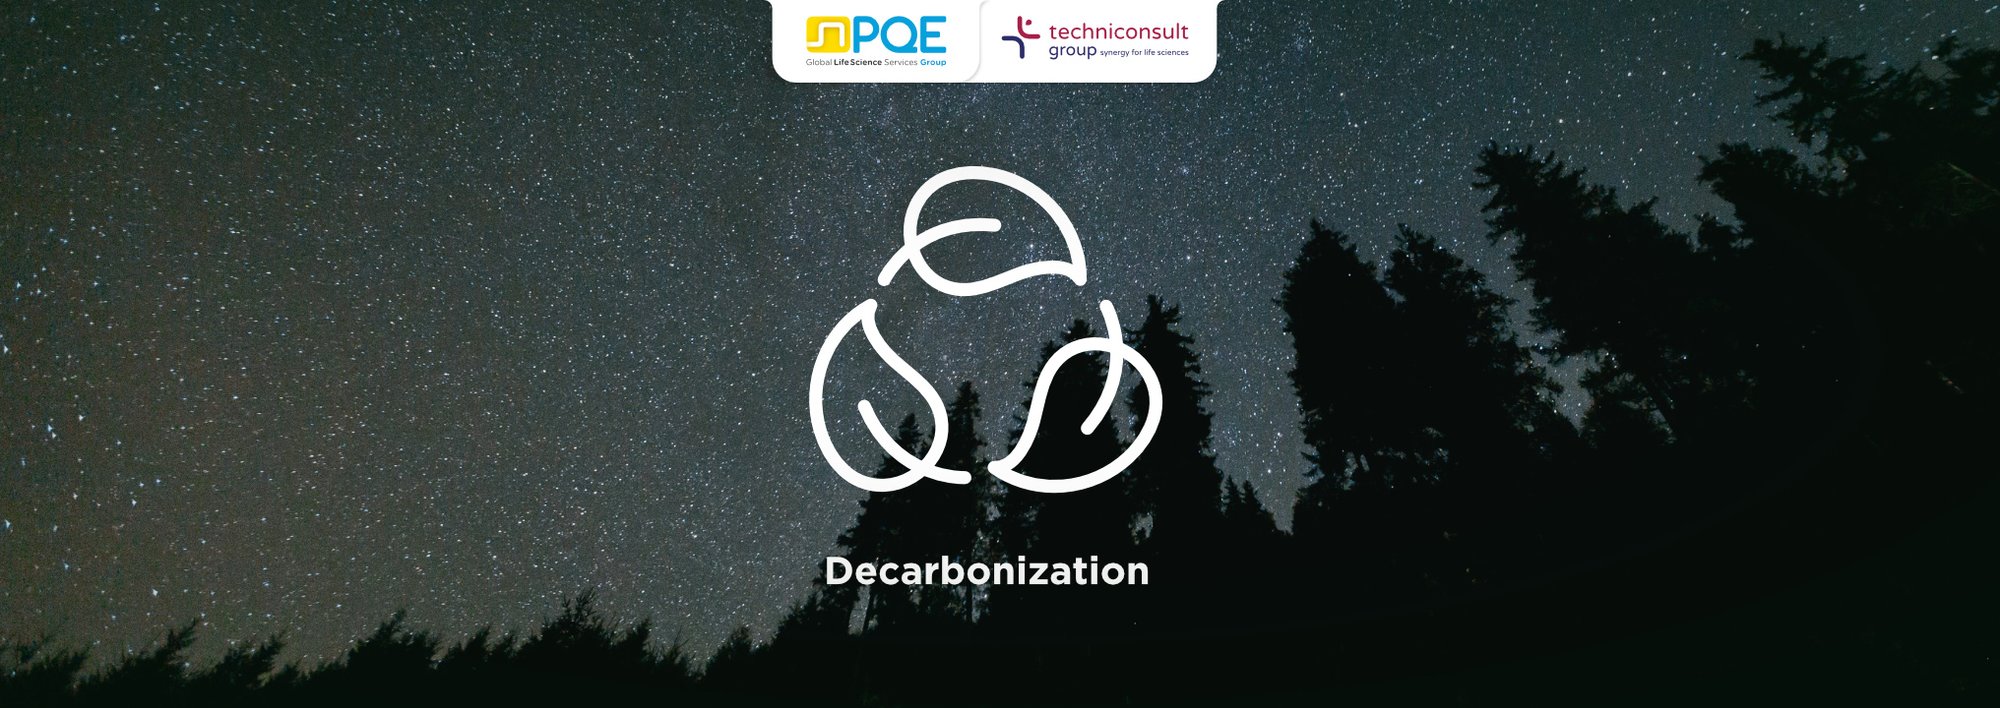 Decarbonization_Site Banner_1